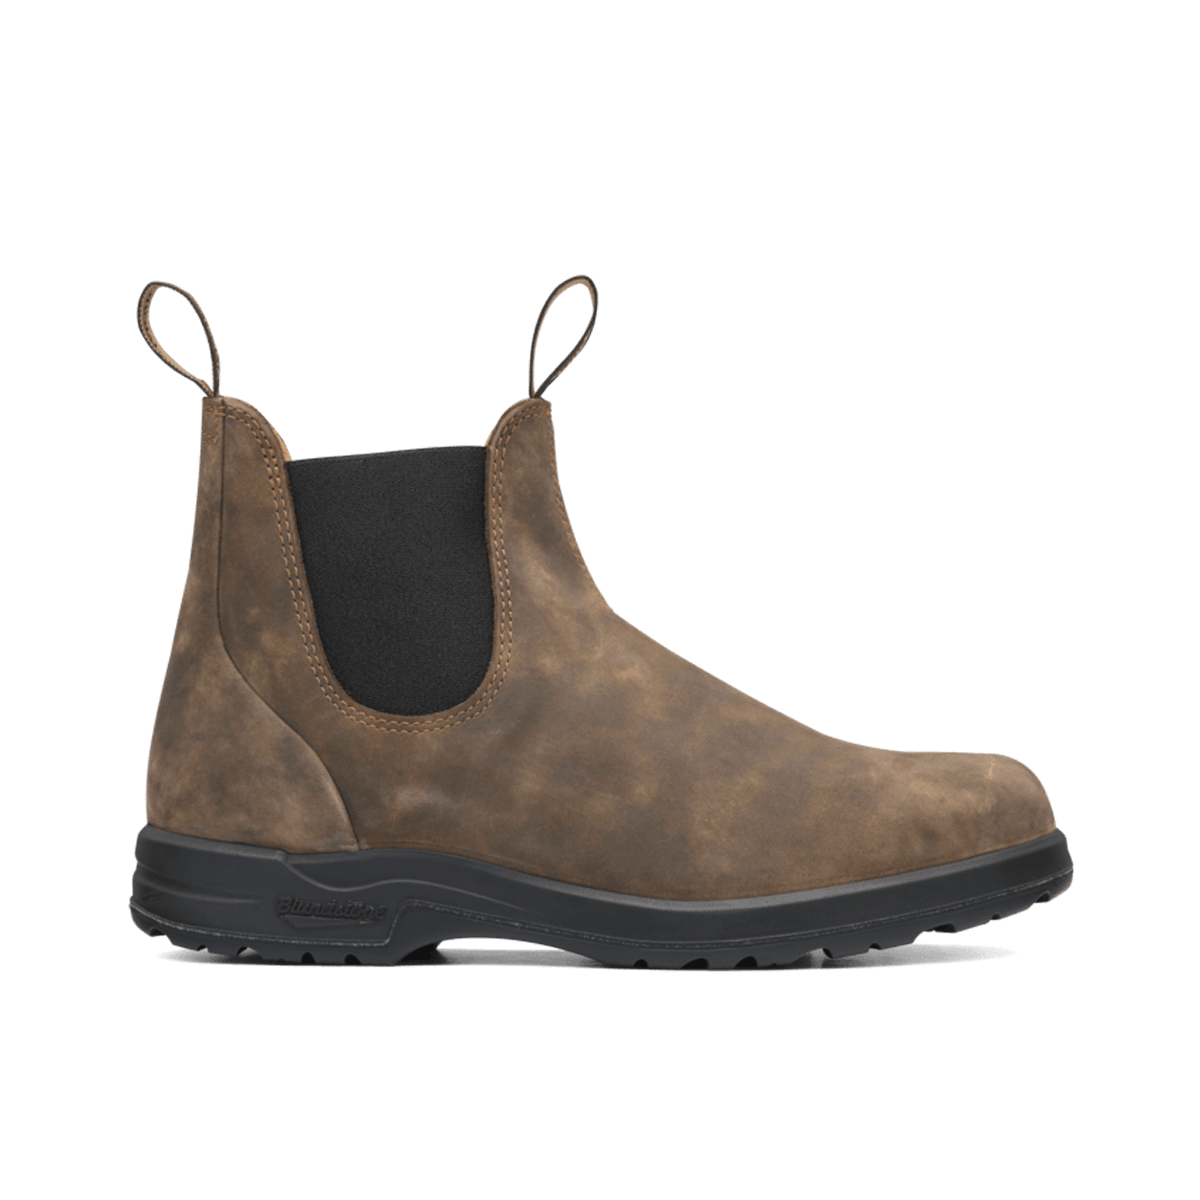 #2056 All terrain boots